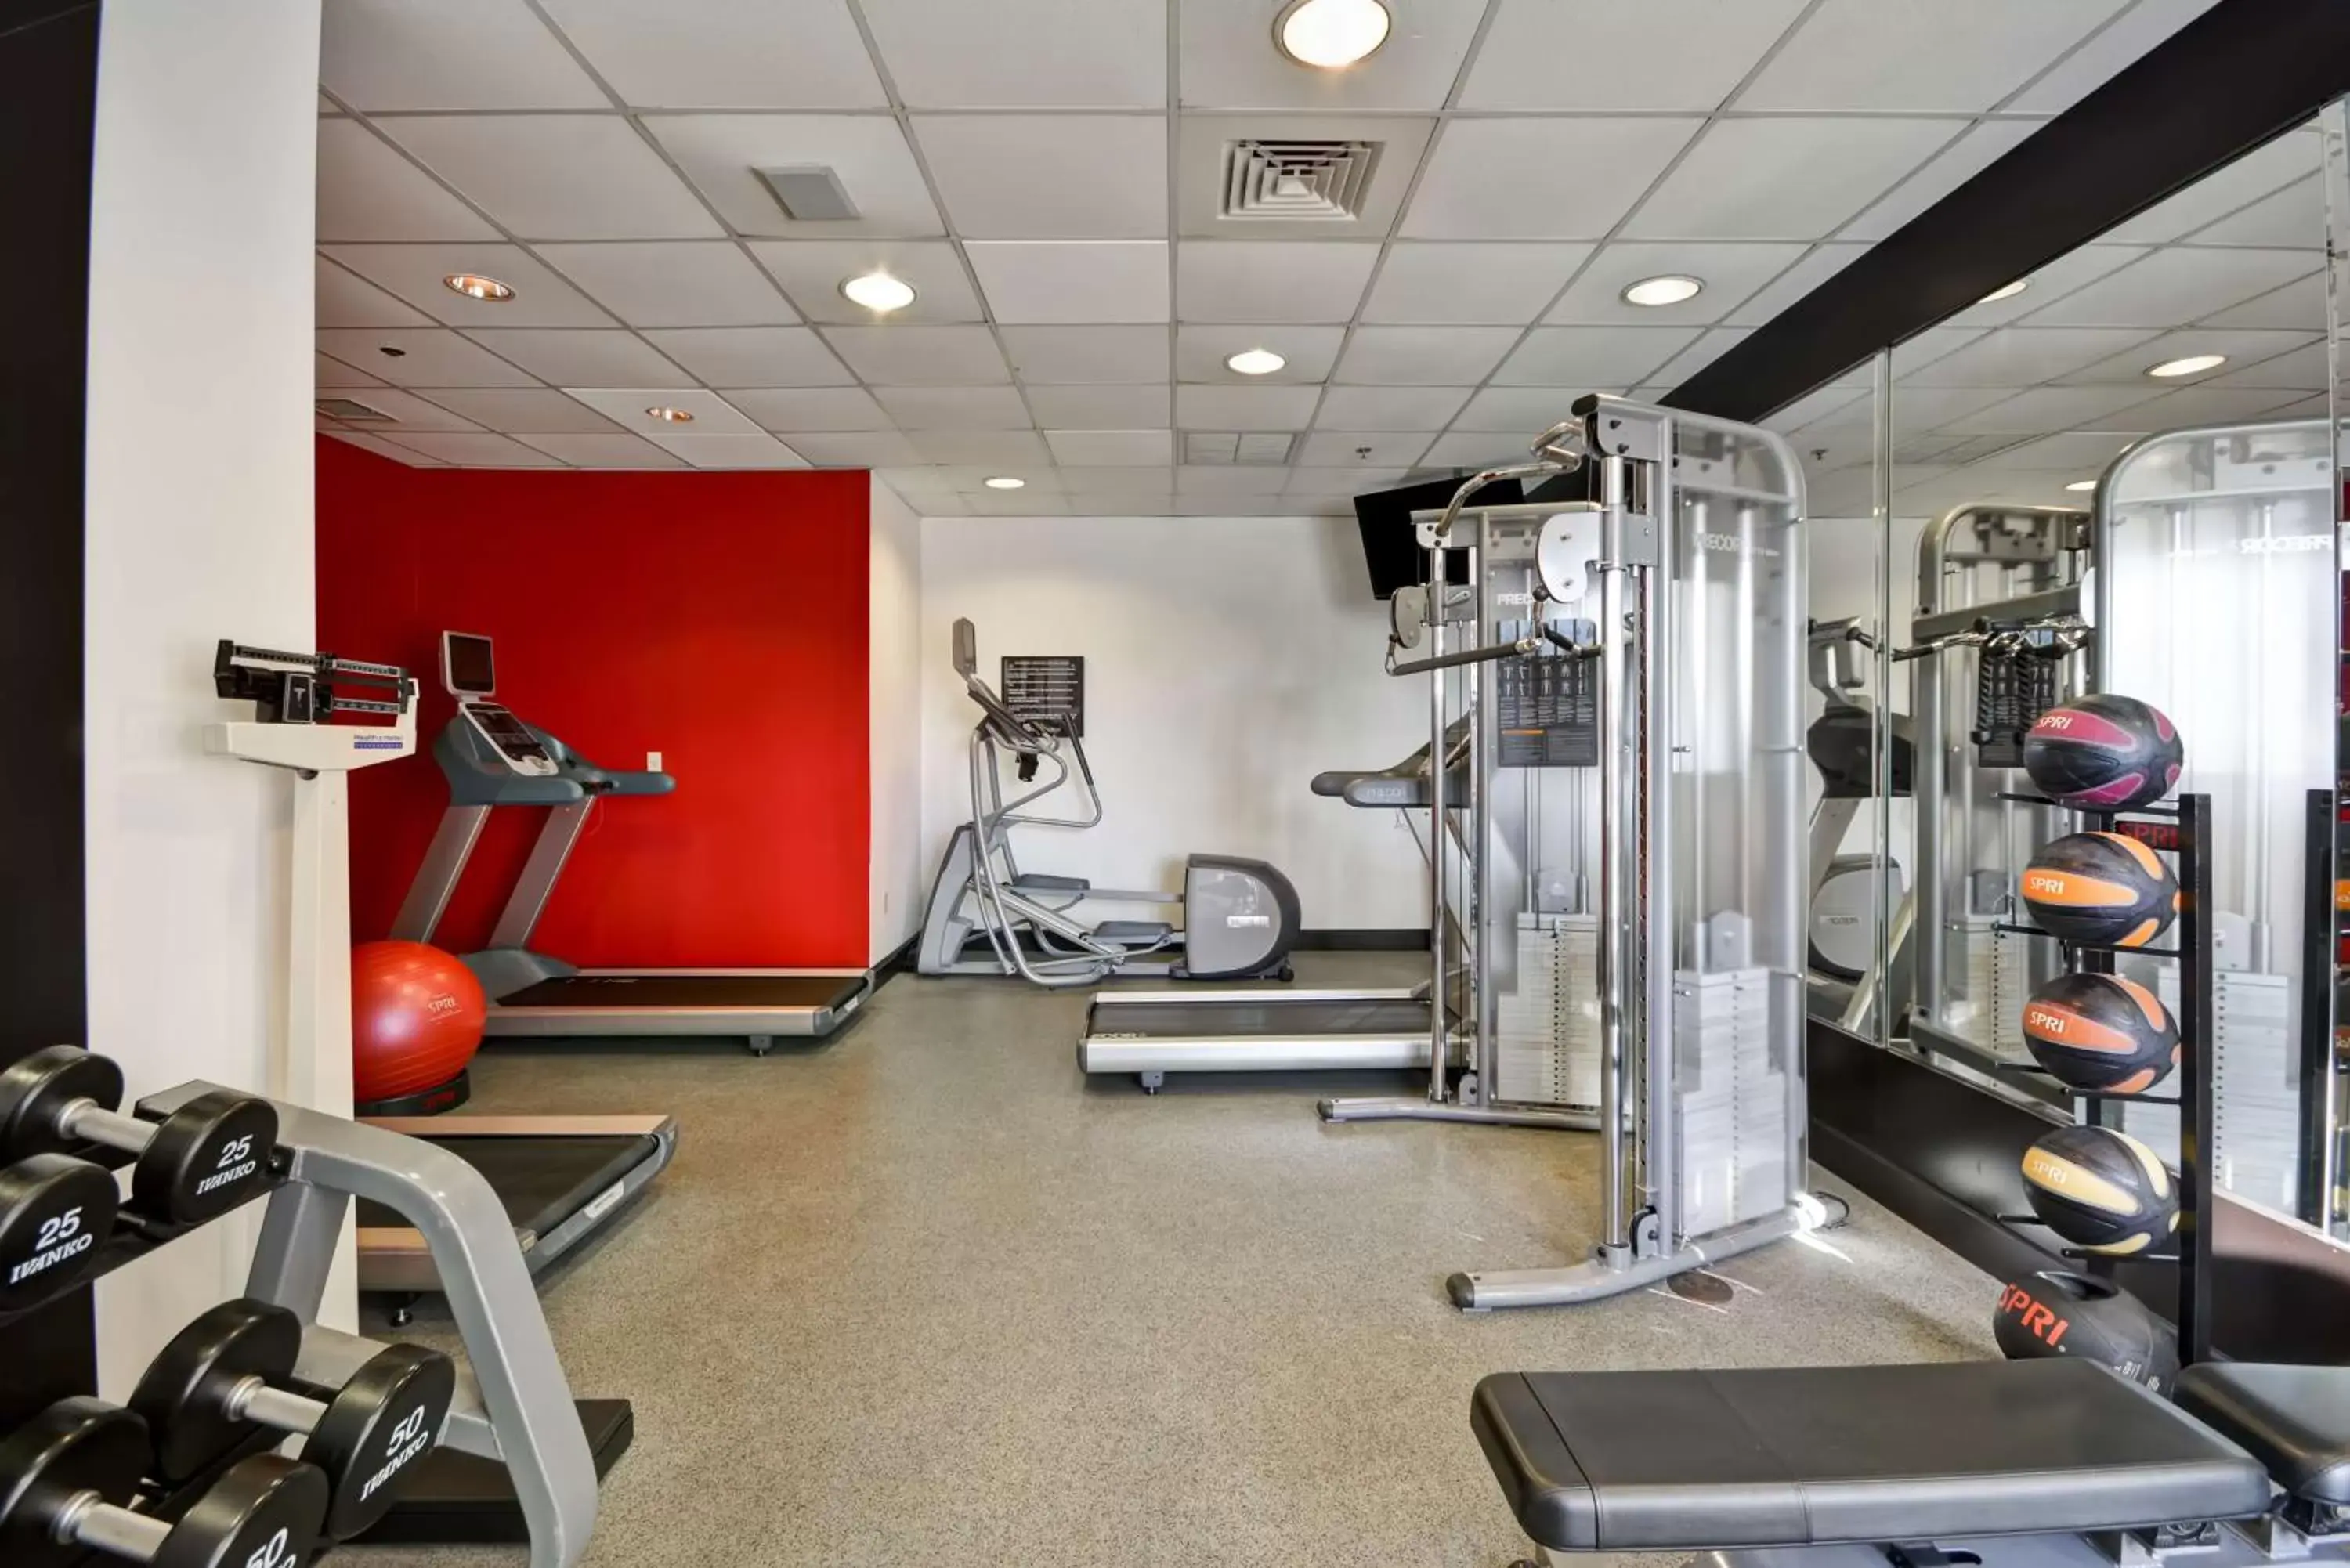 Fitness centre/facilities, Fitness Center/Facilities in Hilton Garden Inn Sarasota-Bradenton Airport